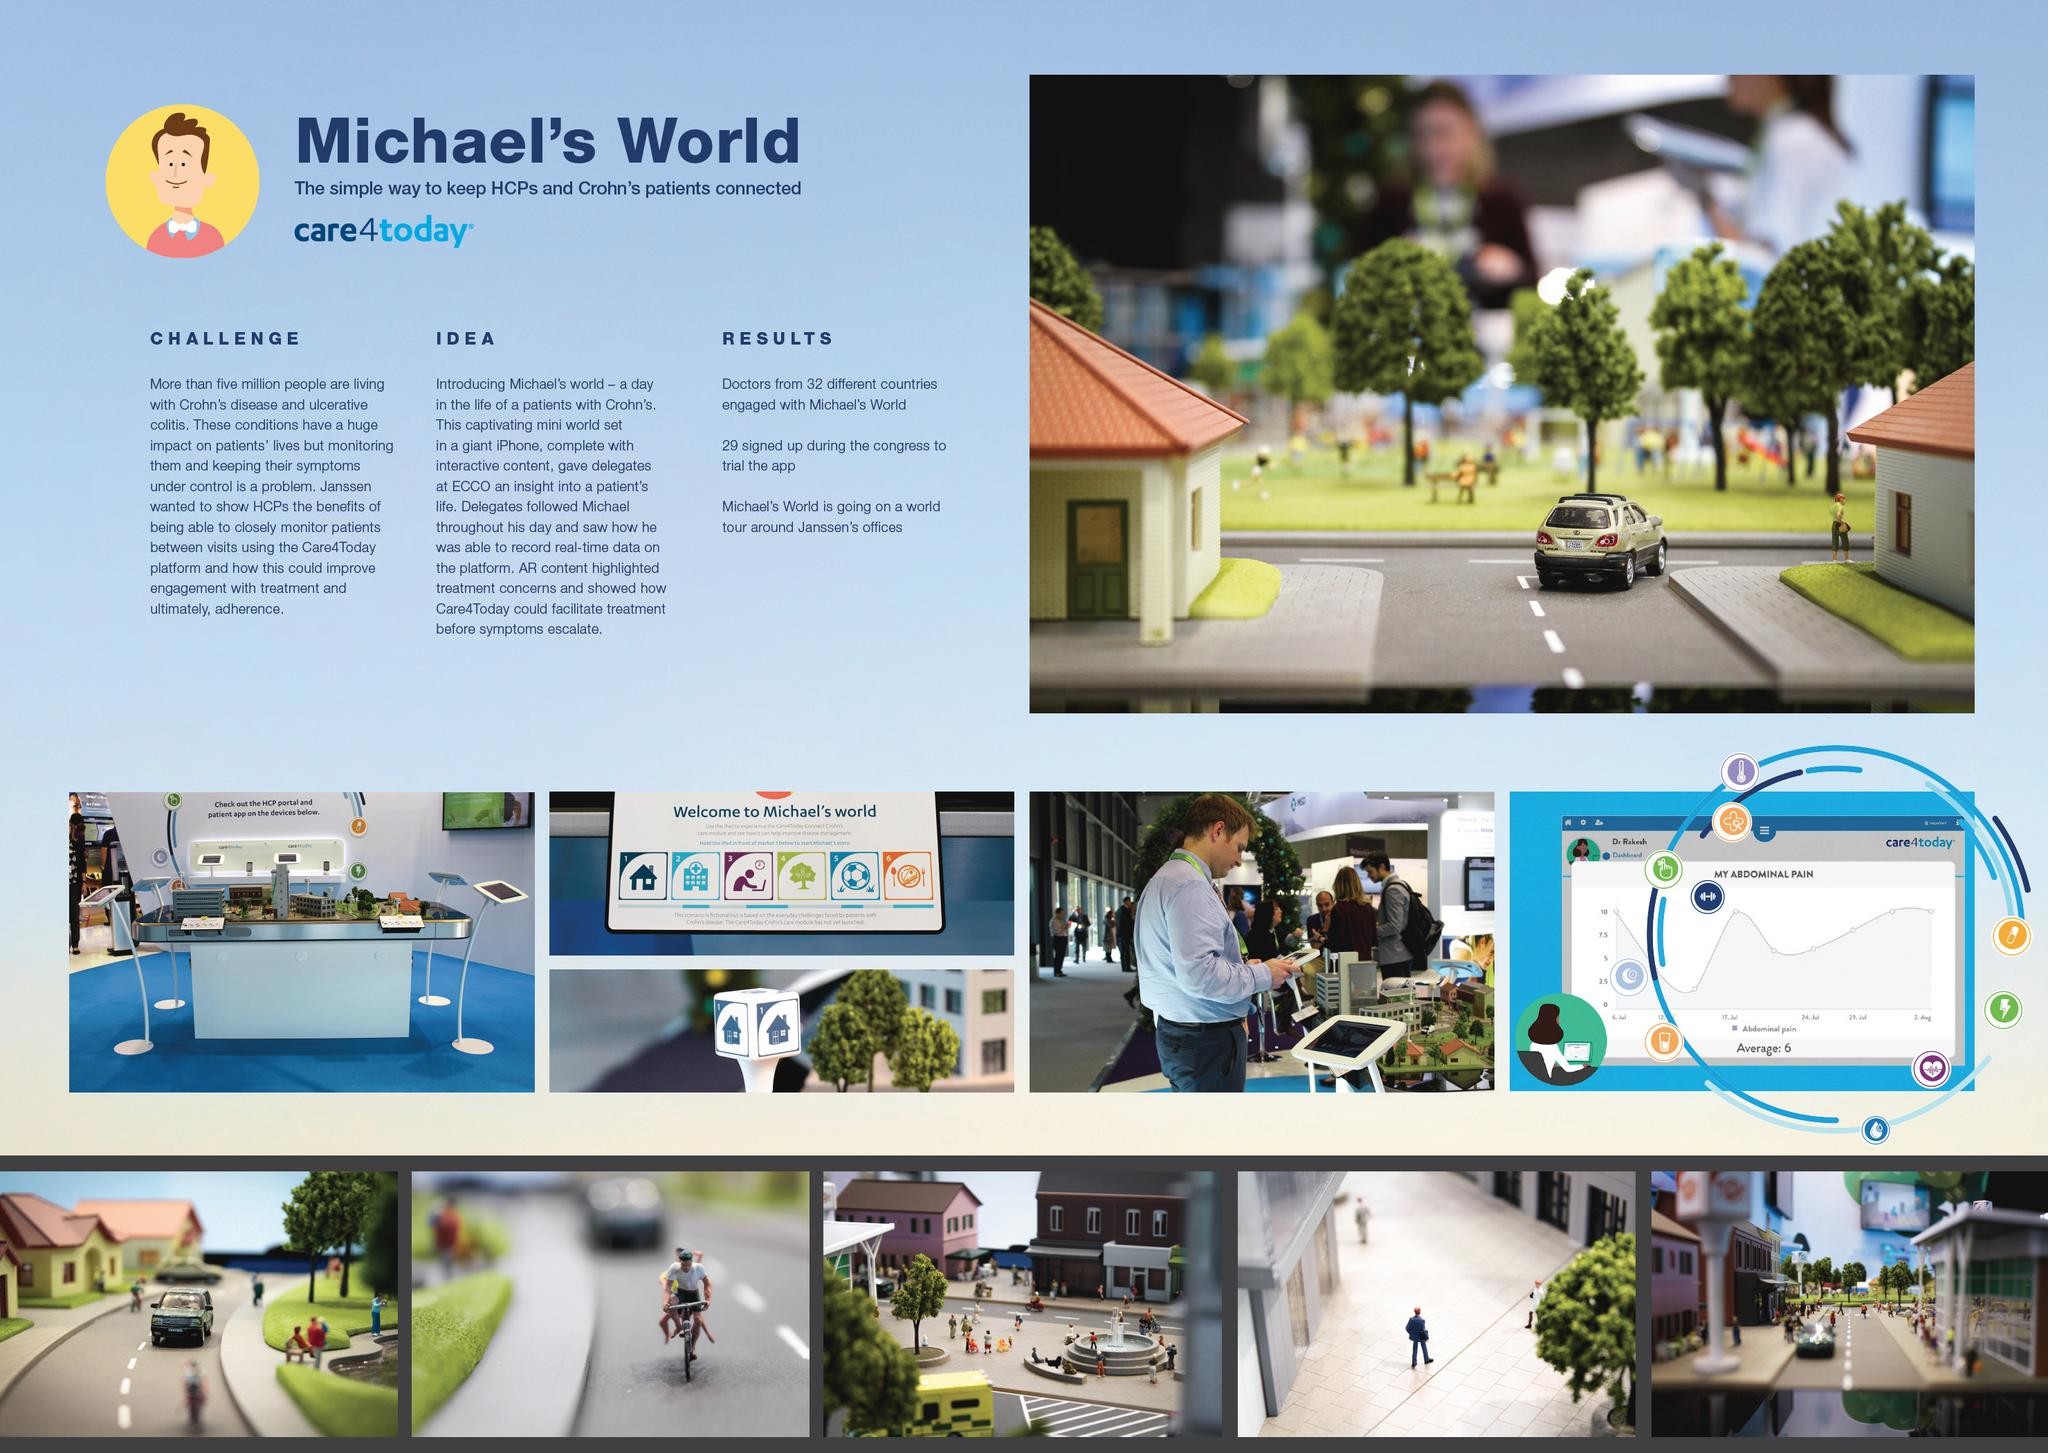 Michael's World